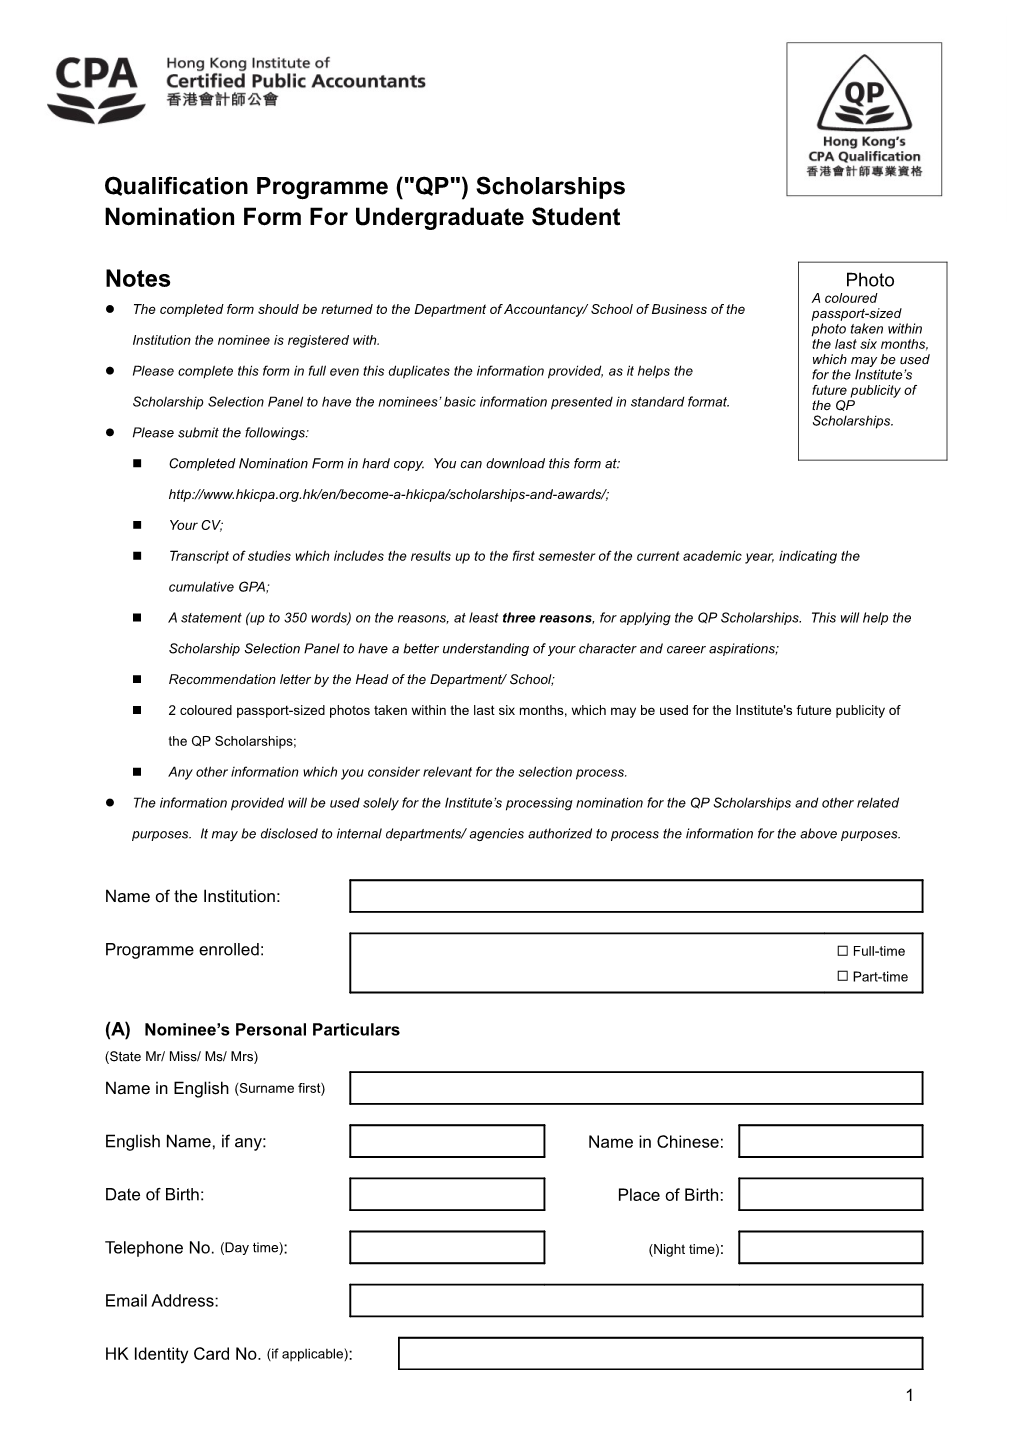 Nomination Form for Undergraduate Student